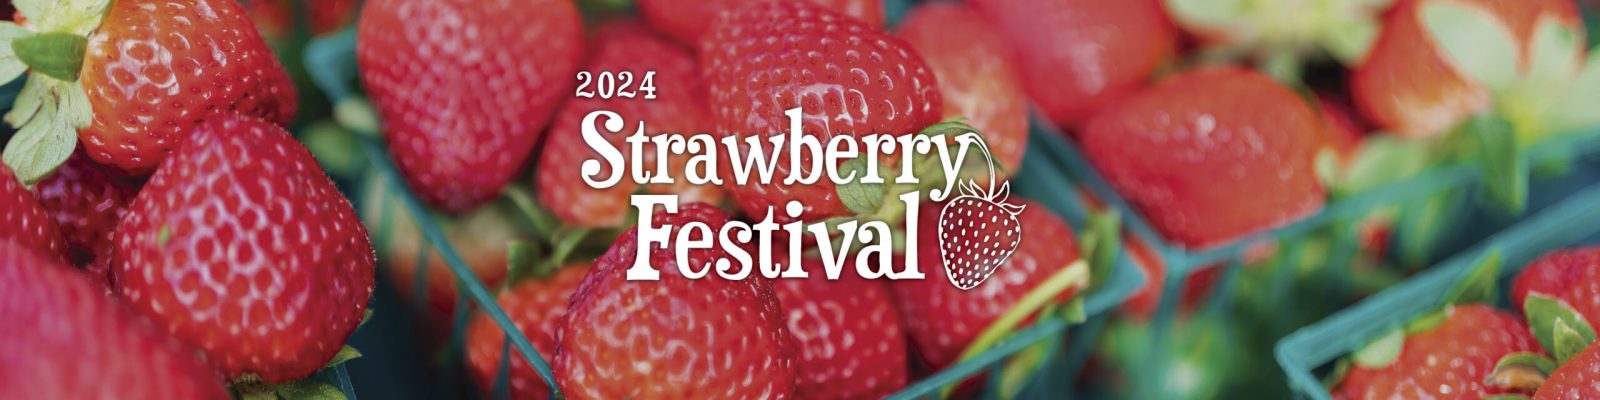 ENT279_Strawberry Fest_Web Individual Header_1600x400_1223